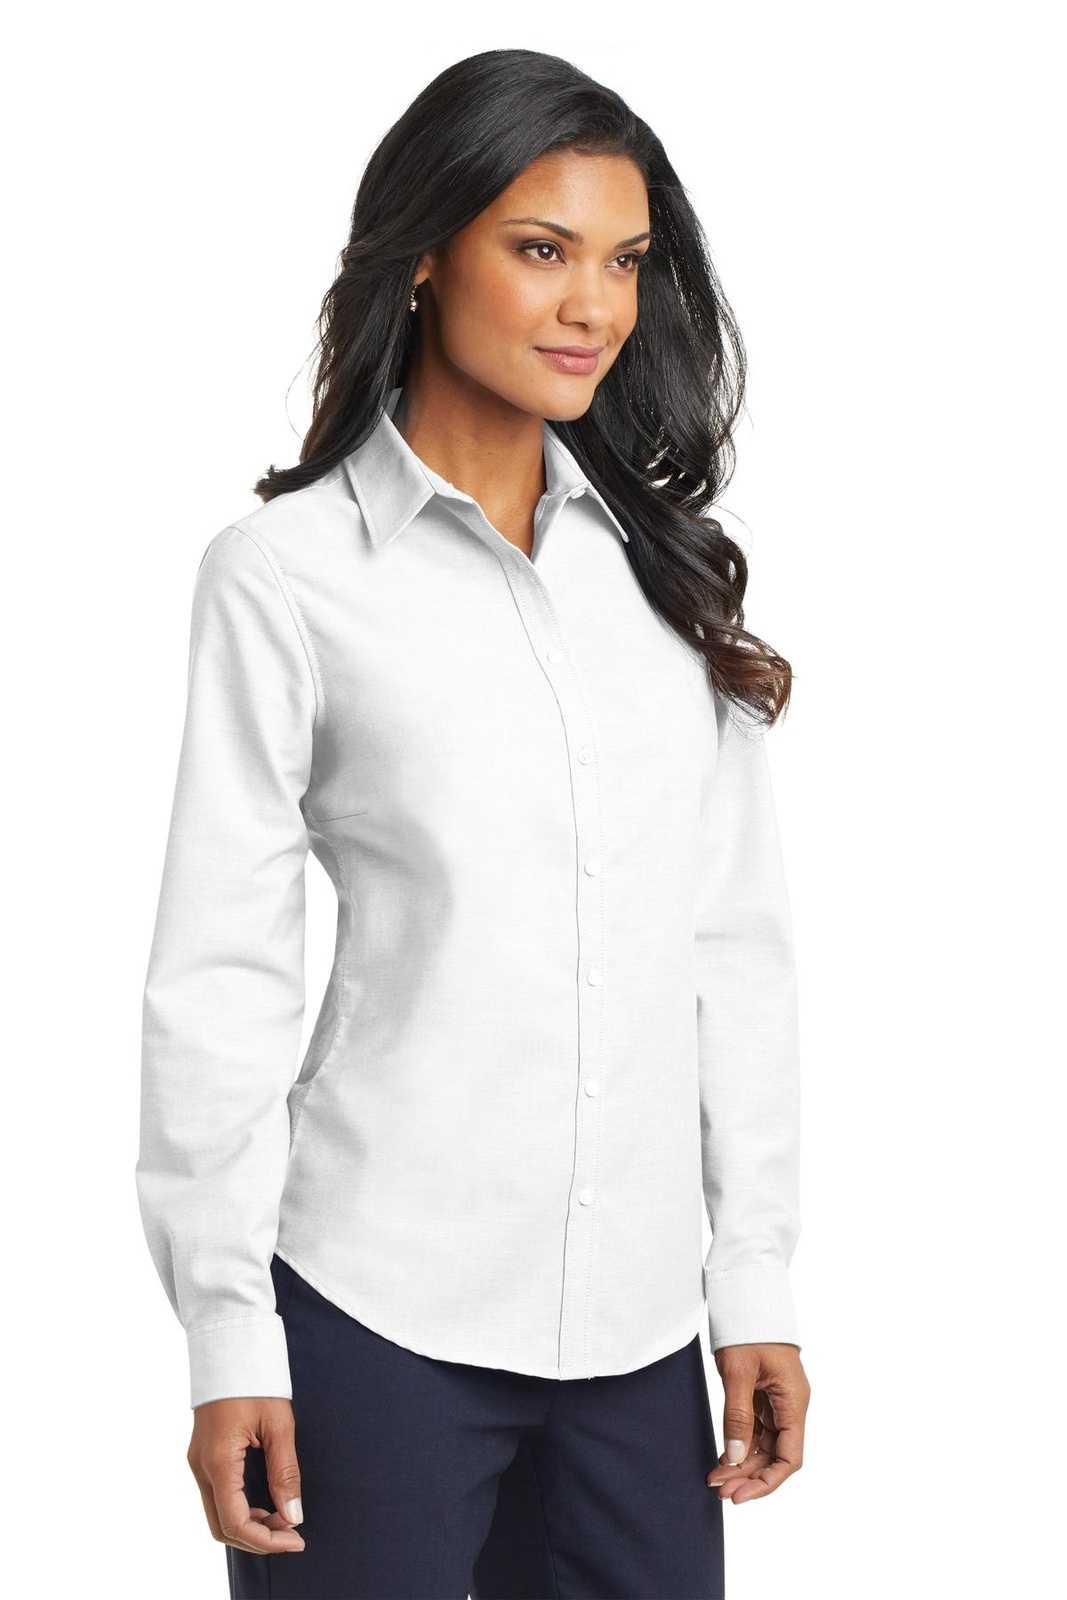 Port Authority L658 Ladies Superpro Oxford Shirt - White - HIT a Double - 4